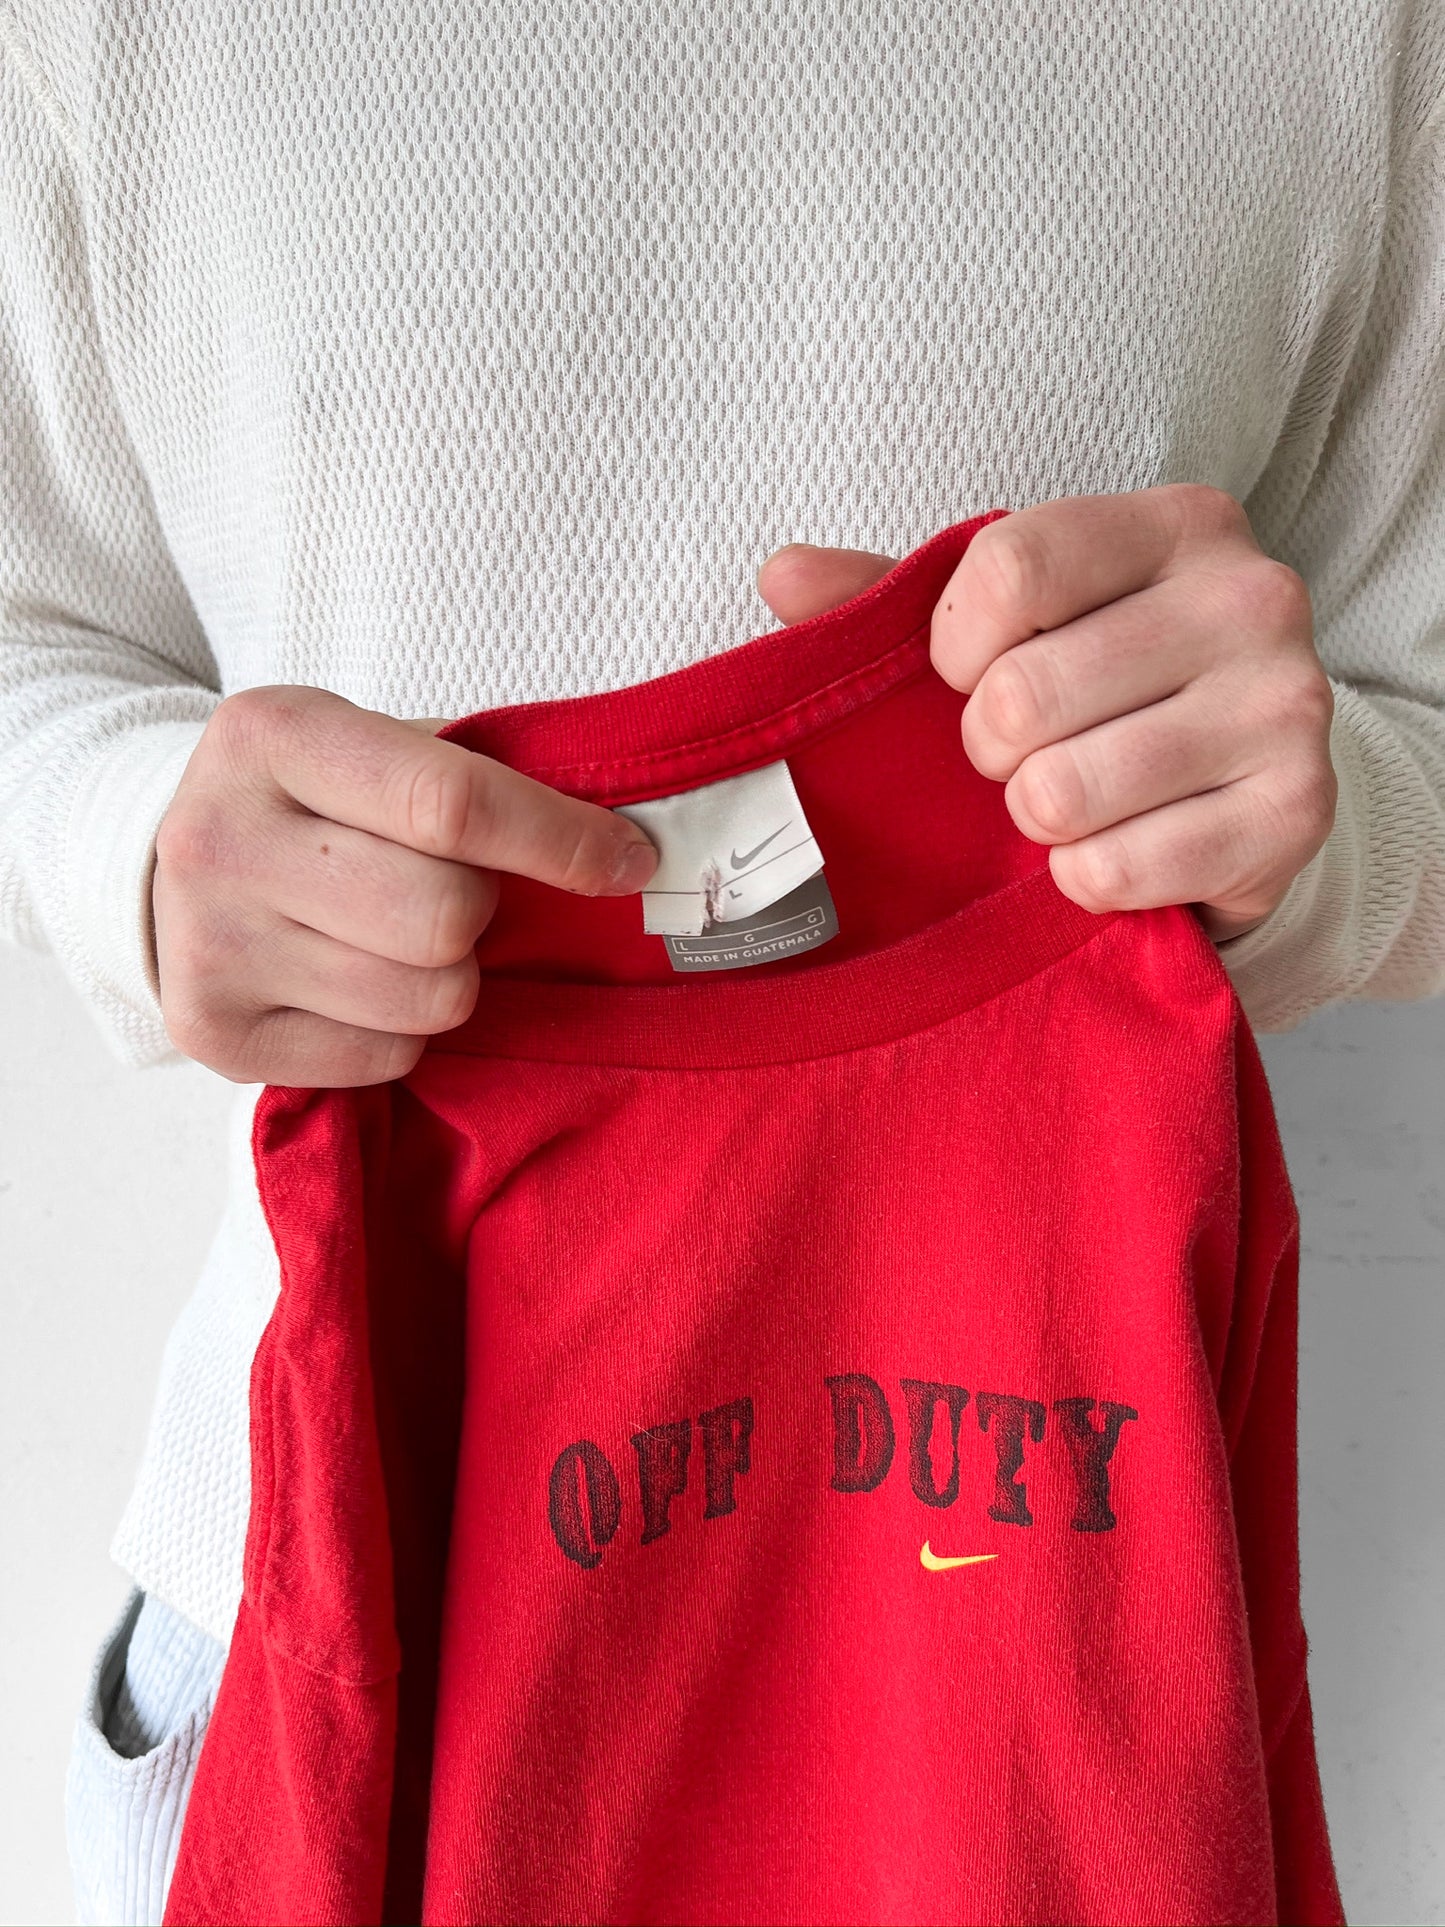 Nike Center Swoosh Off Duty Dragon Shirt - L